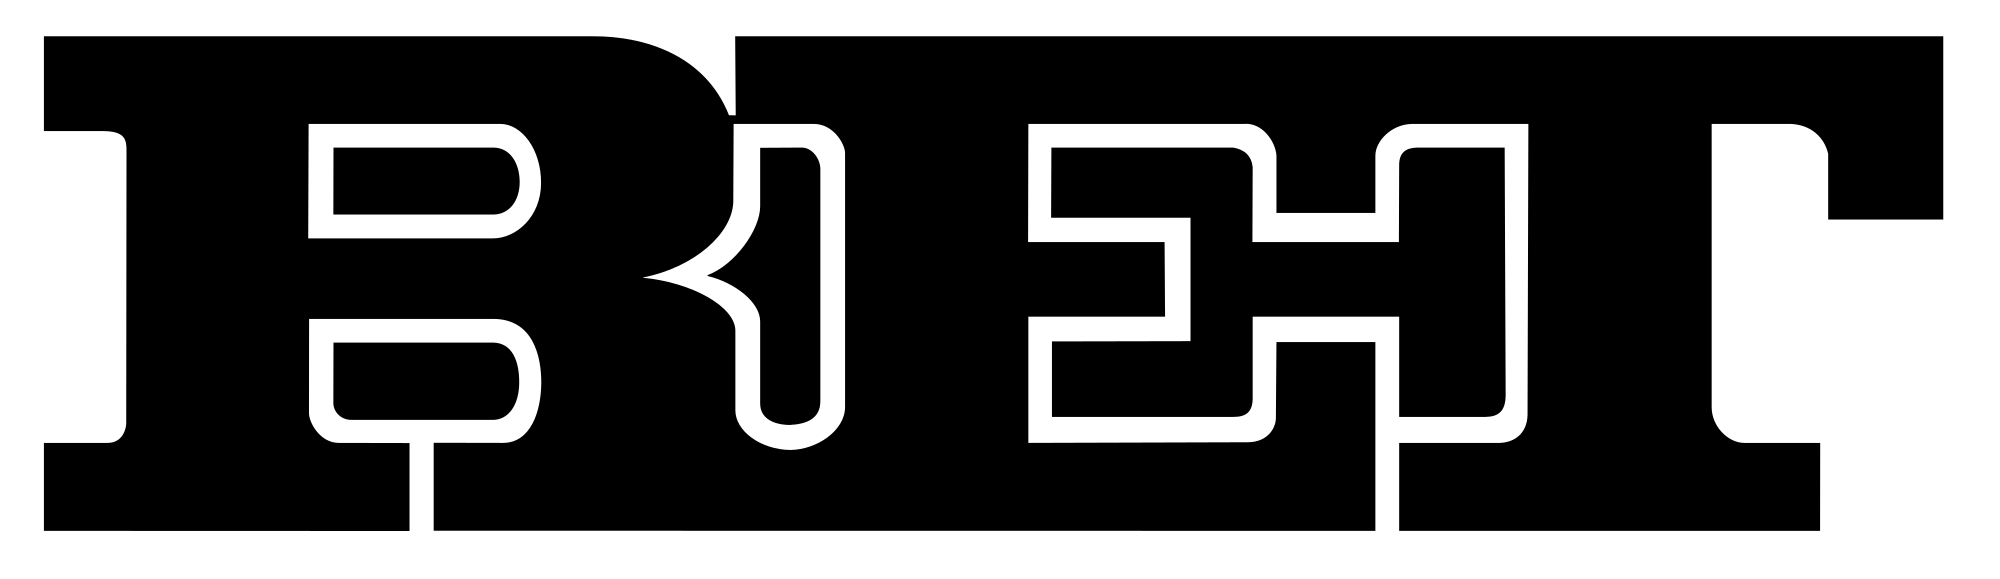 RET-logo, 1965 (Wikimedia Commons)